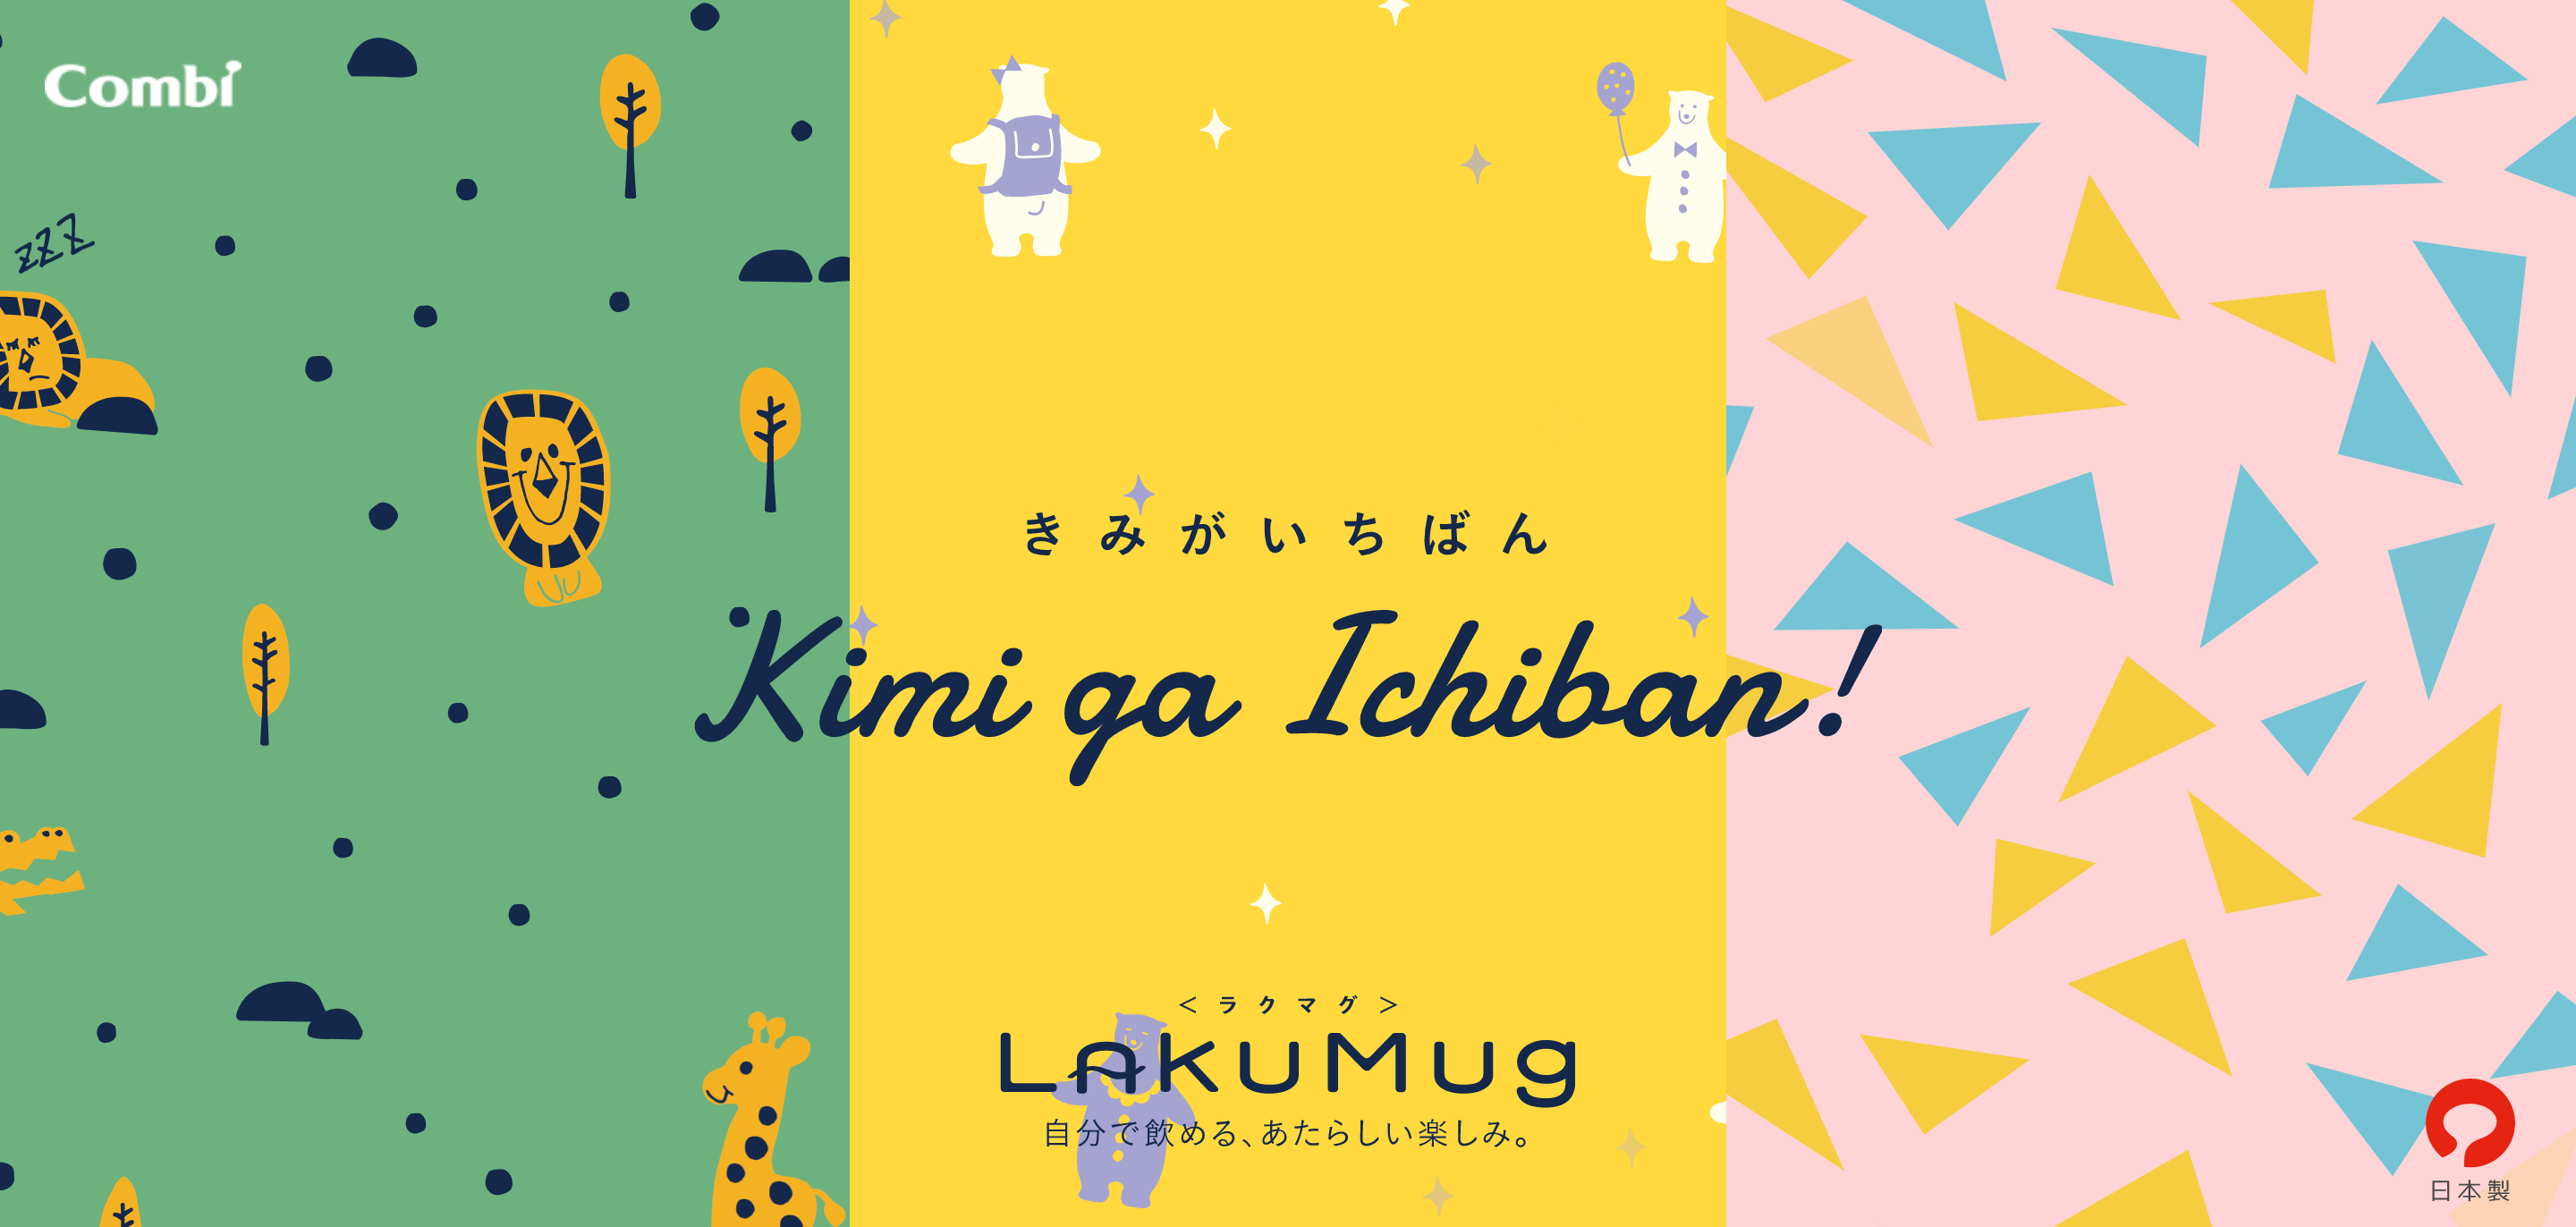 LakuMug（ラクマグ）| コンビ